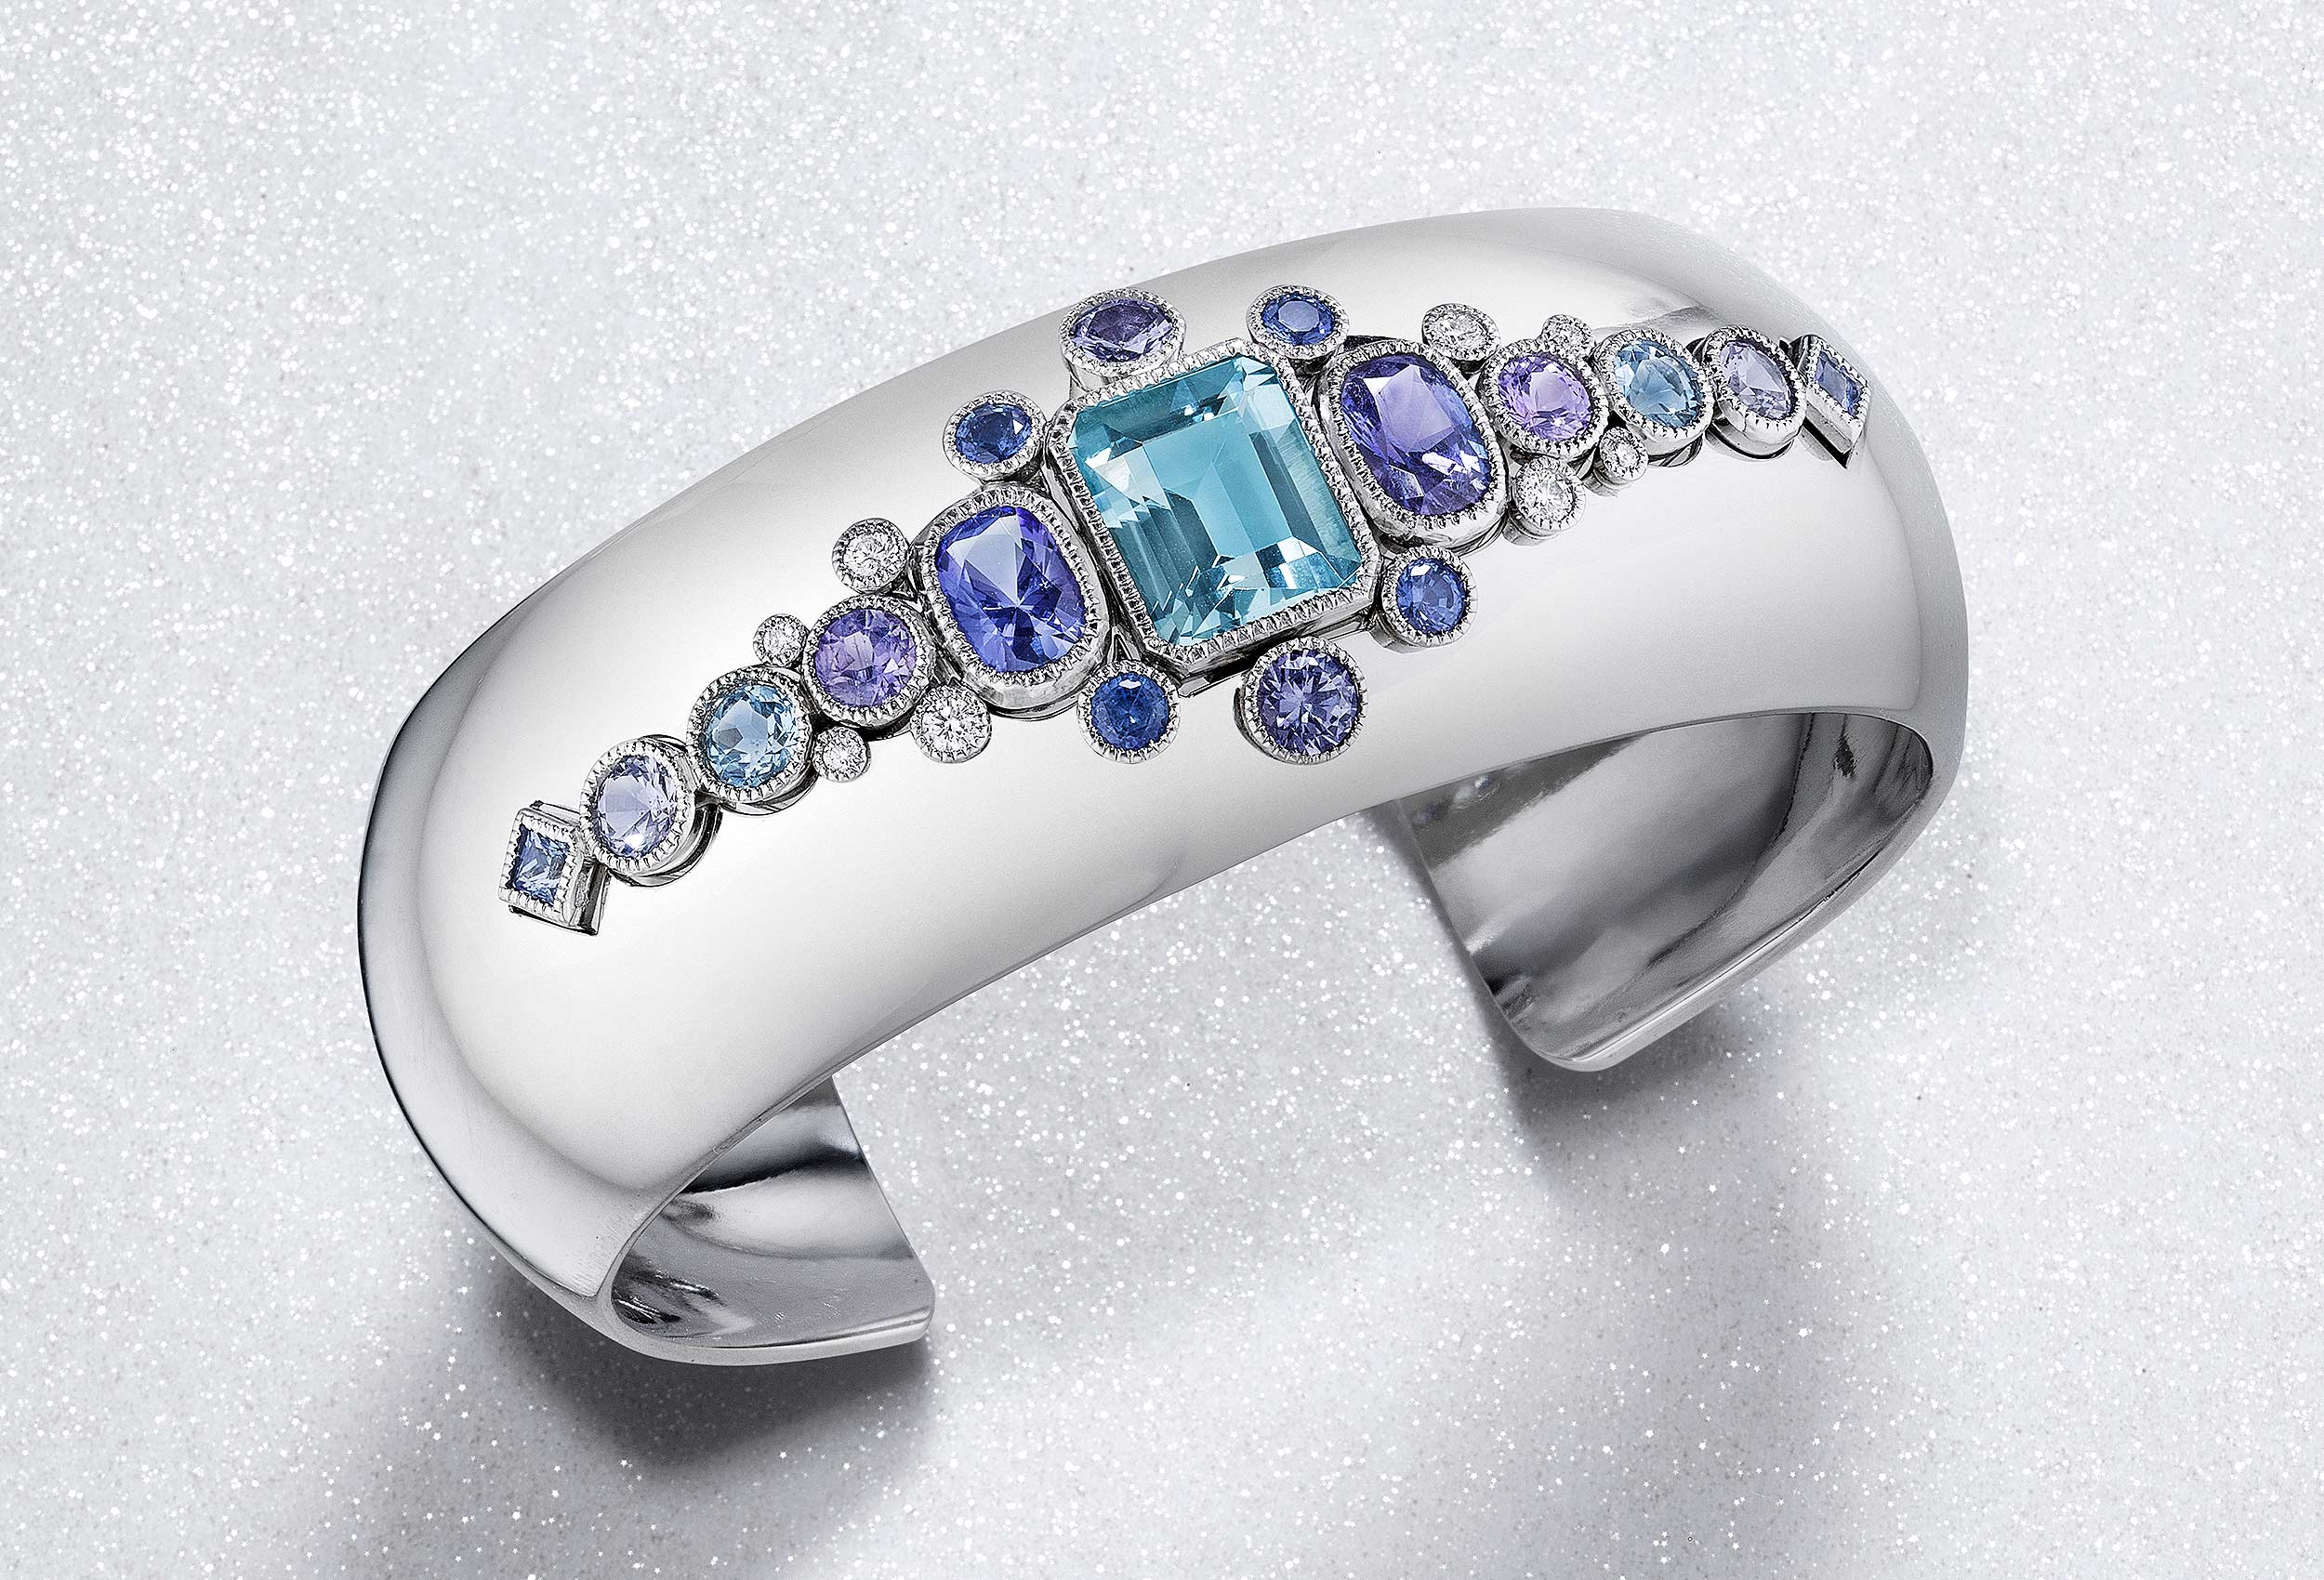 Shiny Bracelet with Gemstones